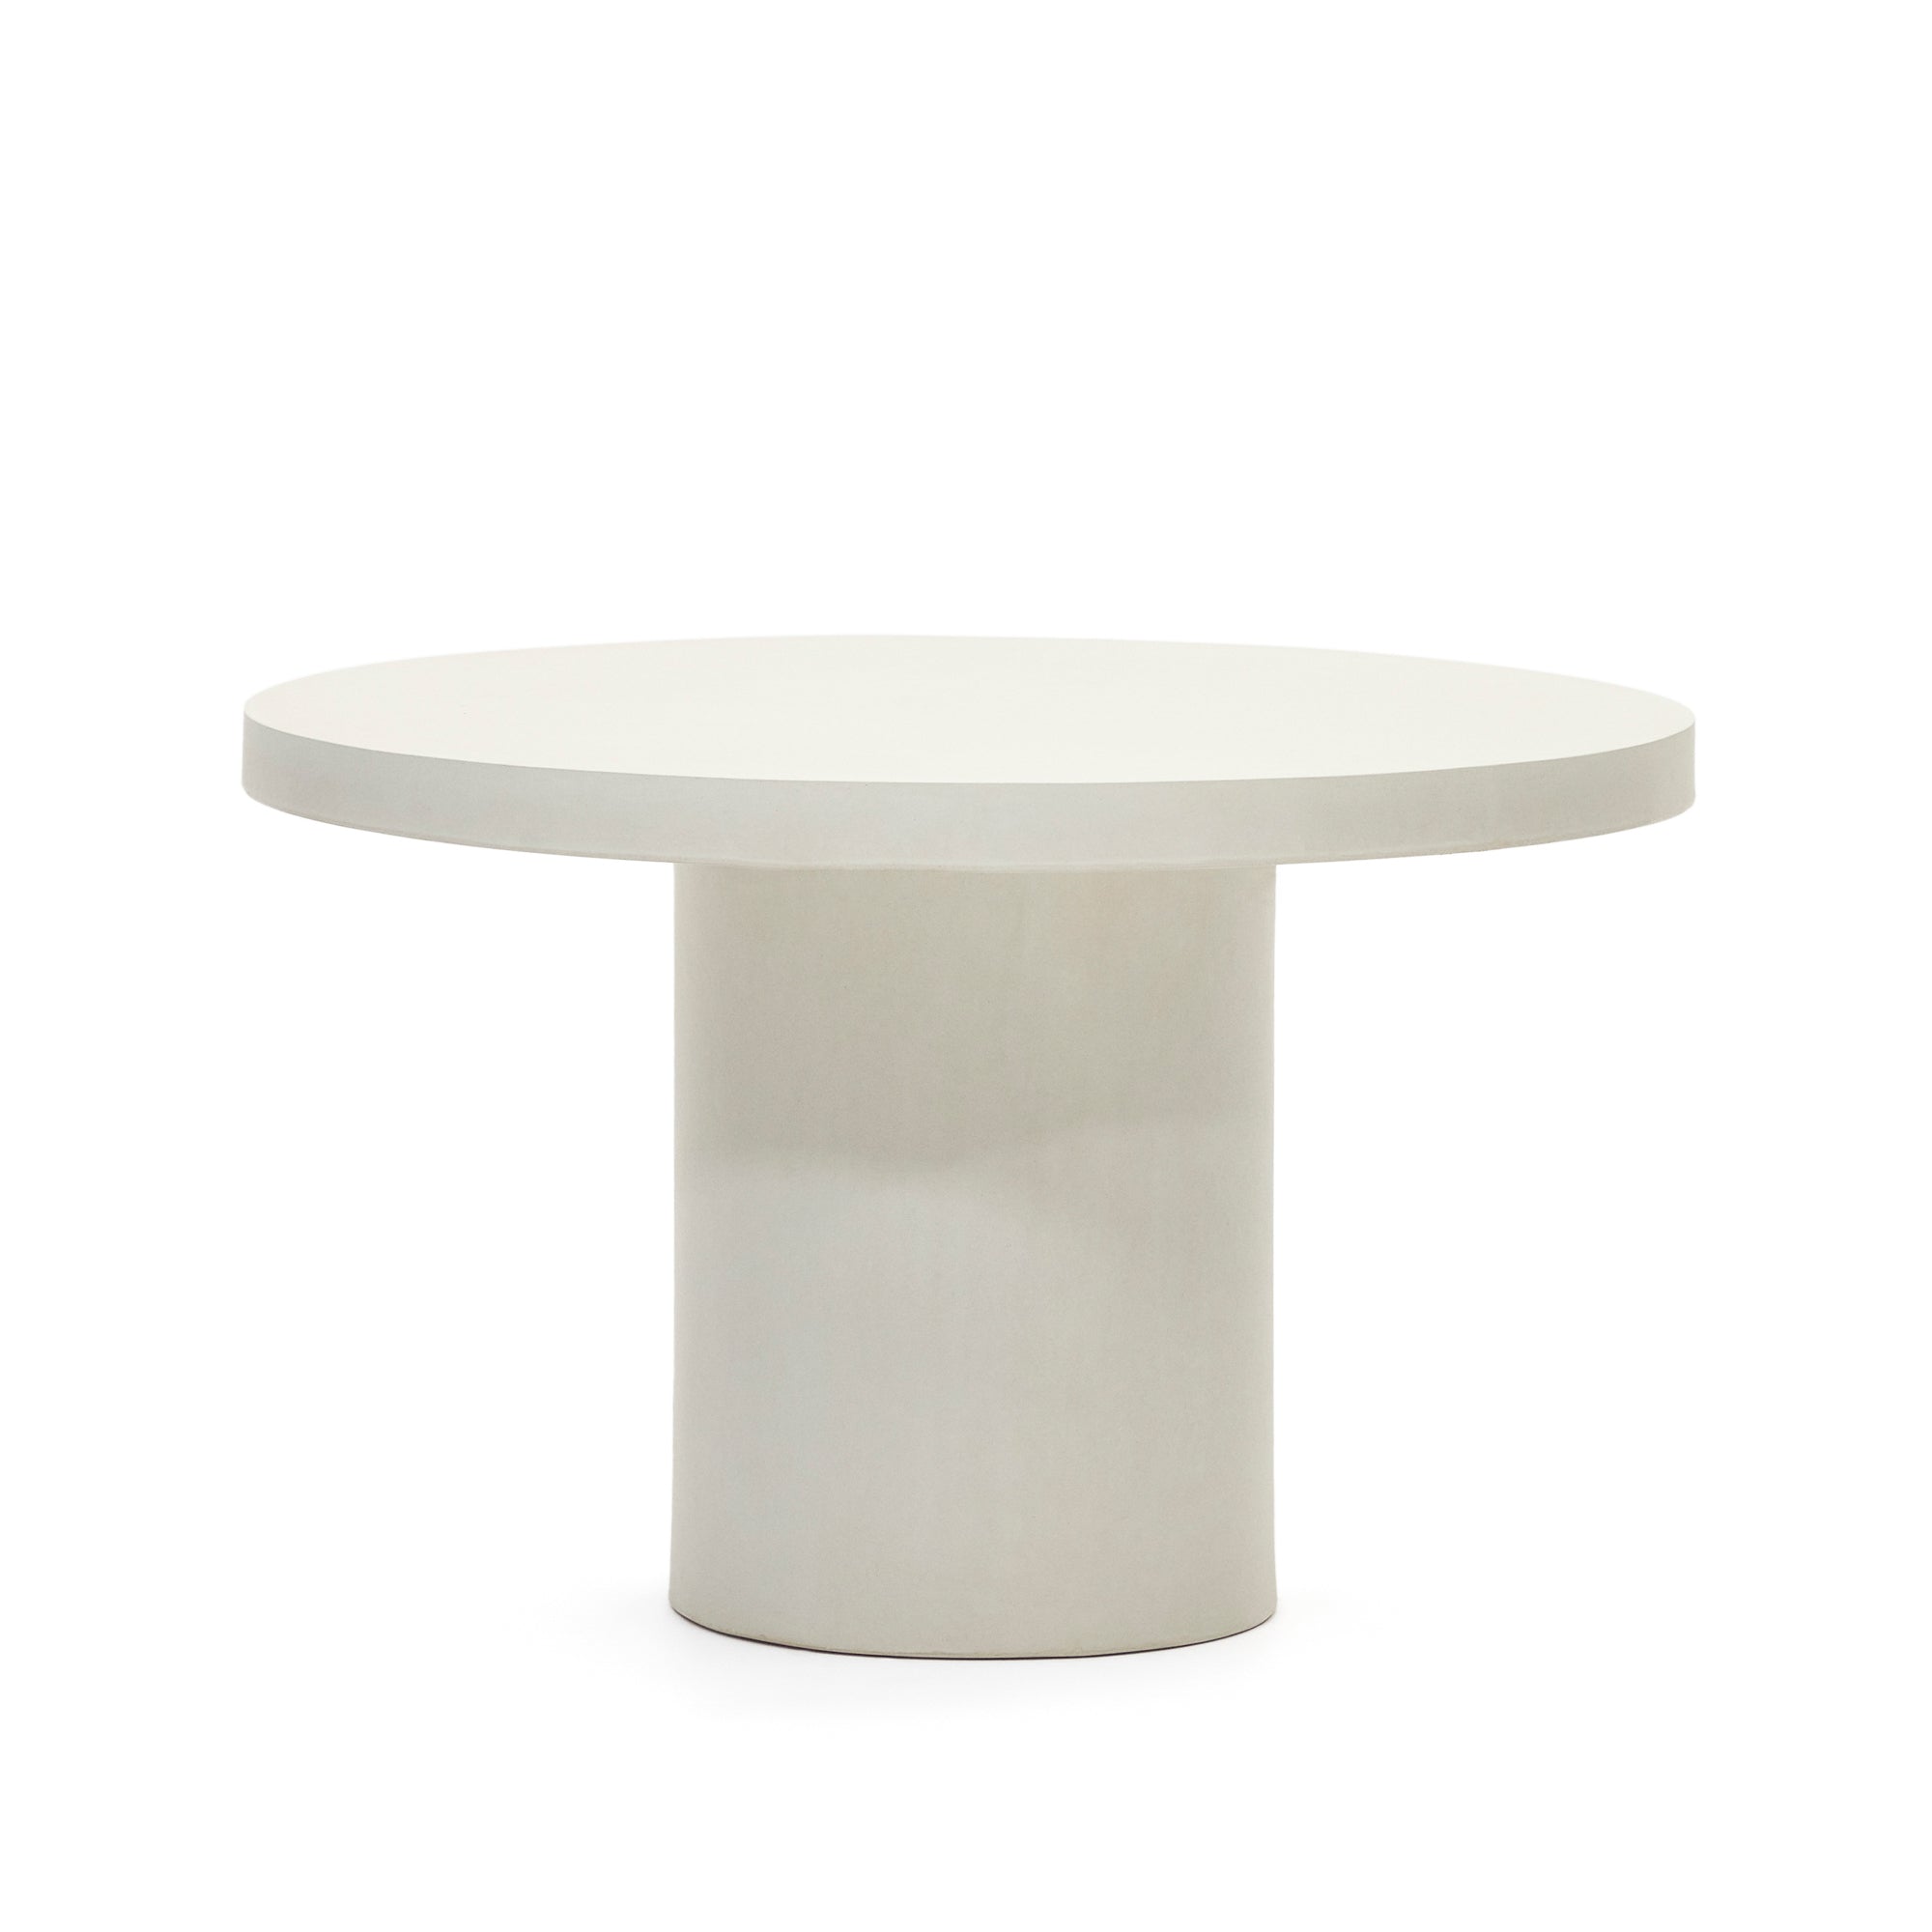 Aiguablava round table in white cement, Ø 120 cm